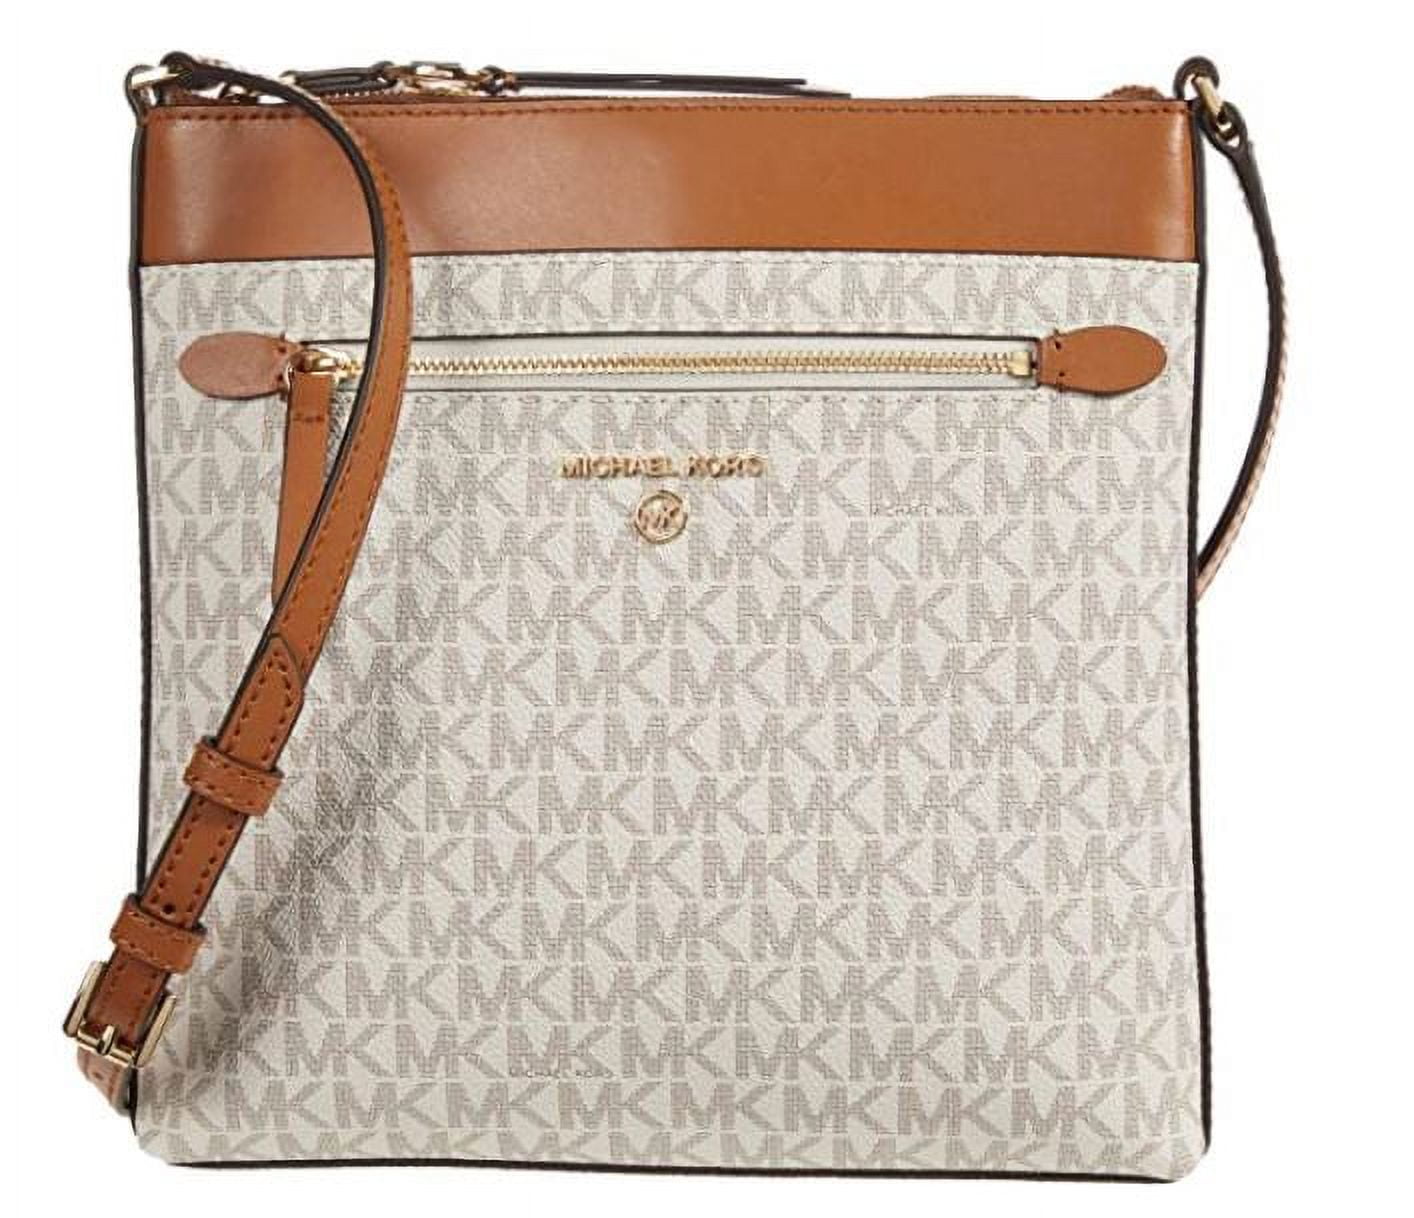 Michael Kors Marilyn Small Crossbody Vanilla/Acorn One Size: Handbags